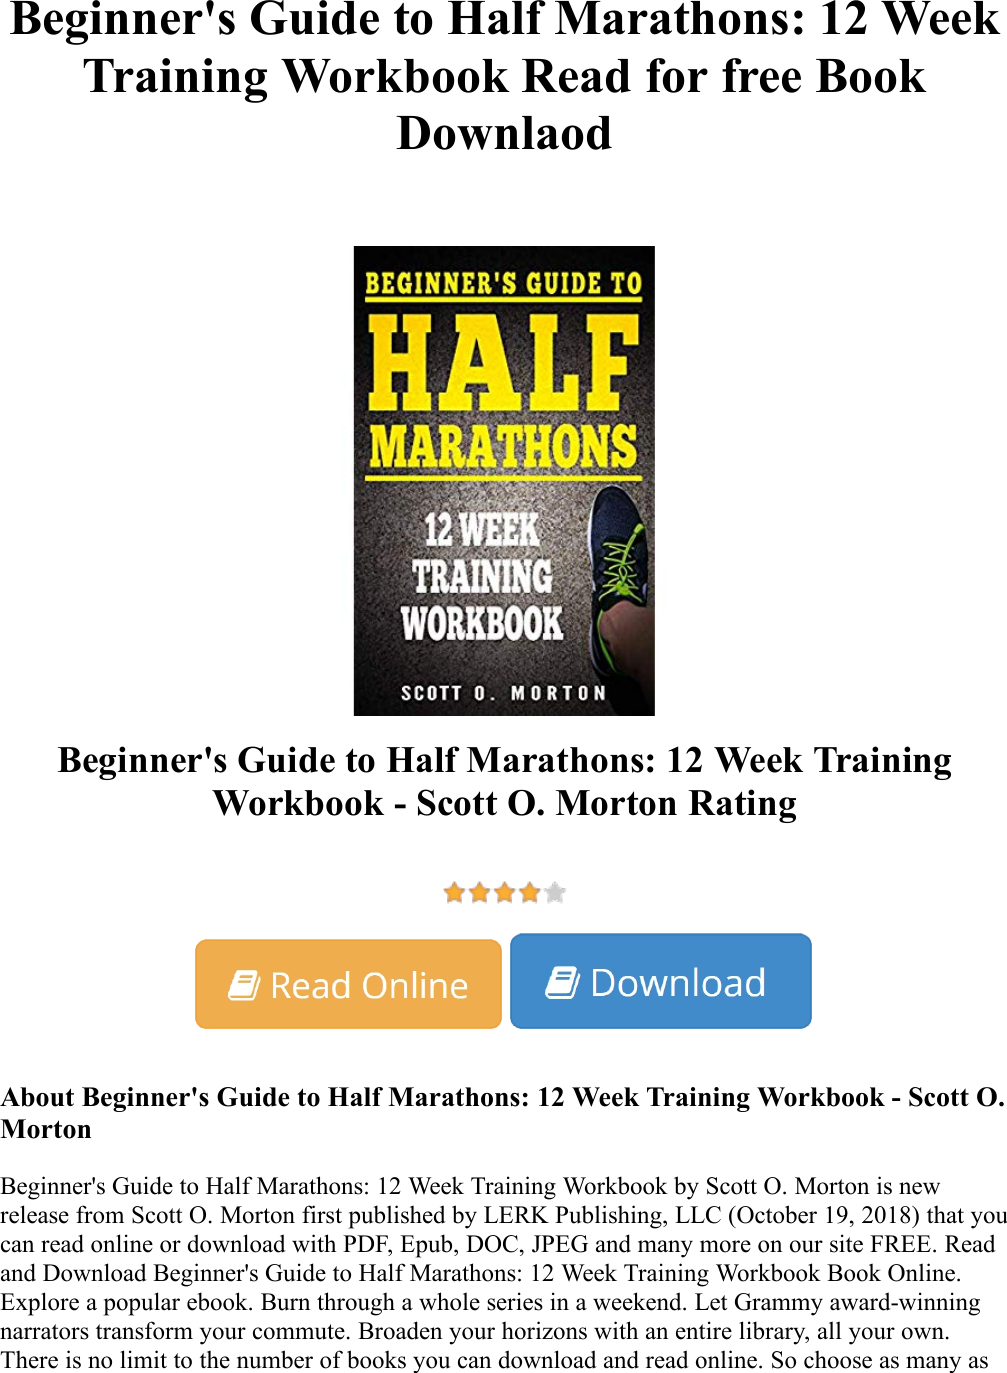 Page 1 of 2 - Beginner's Guide To Half Marathons: 12 Week Training Workbook - Scott O. Morton Read For Free Book Downlaod Beginners-Guide-to-Half-Marathons-12-Week-Training-Workbook